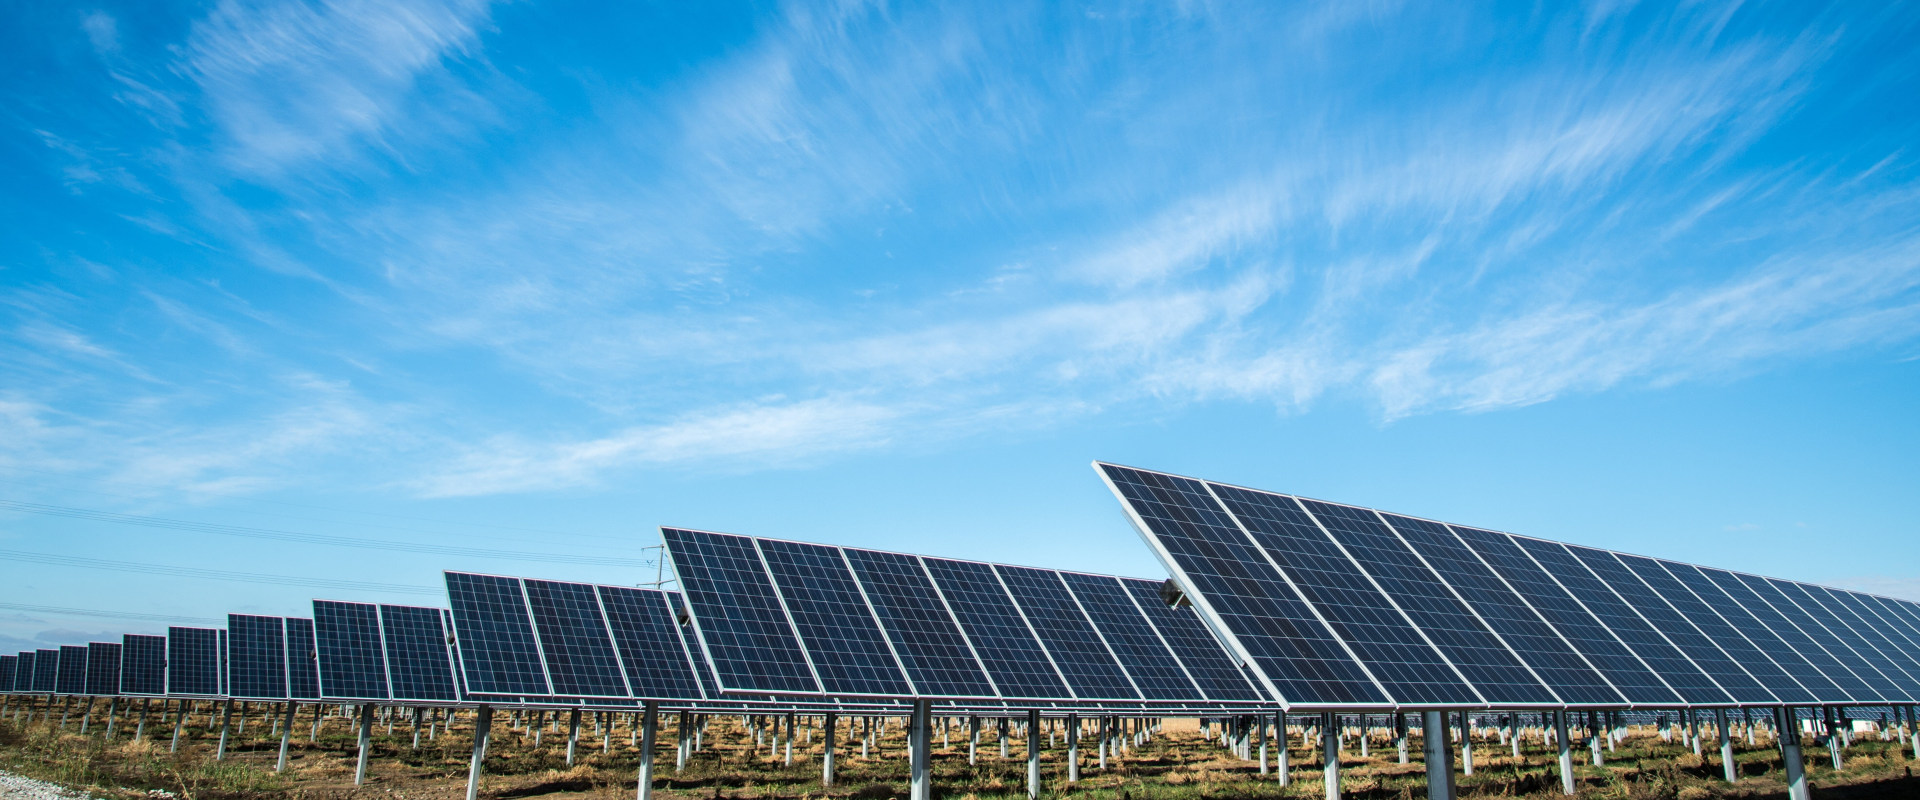 Are solar energy renewable or nonrenewable?